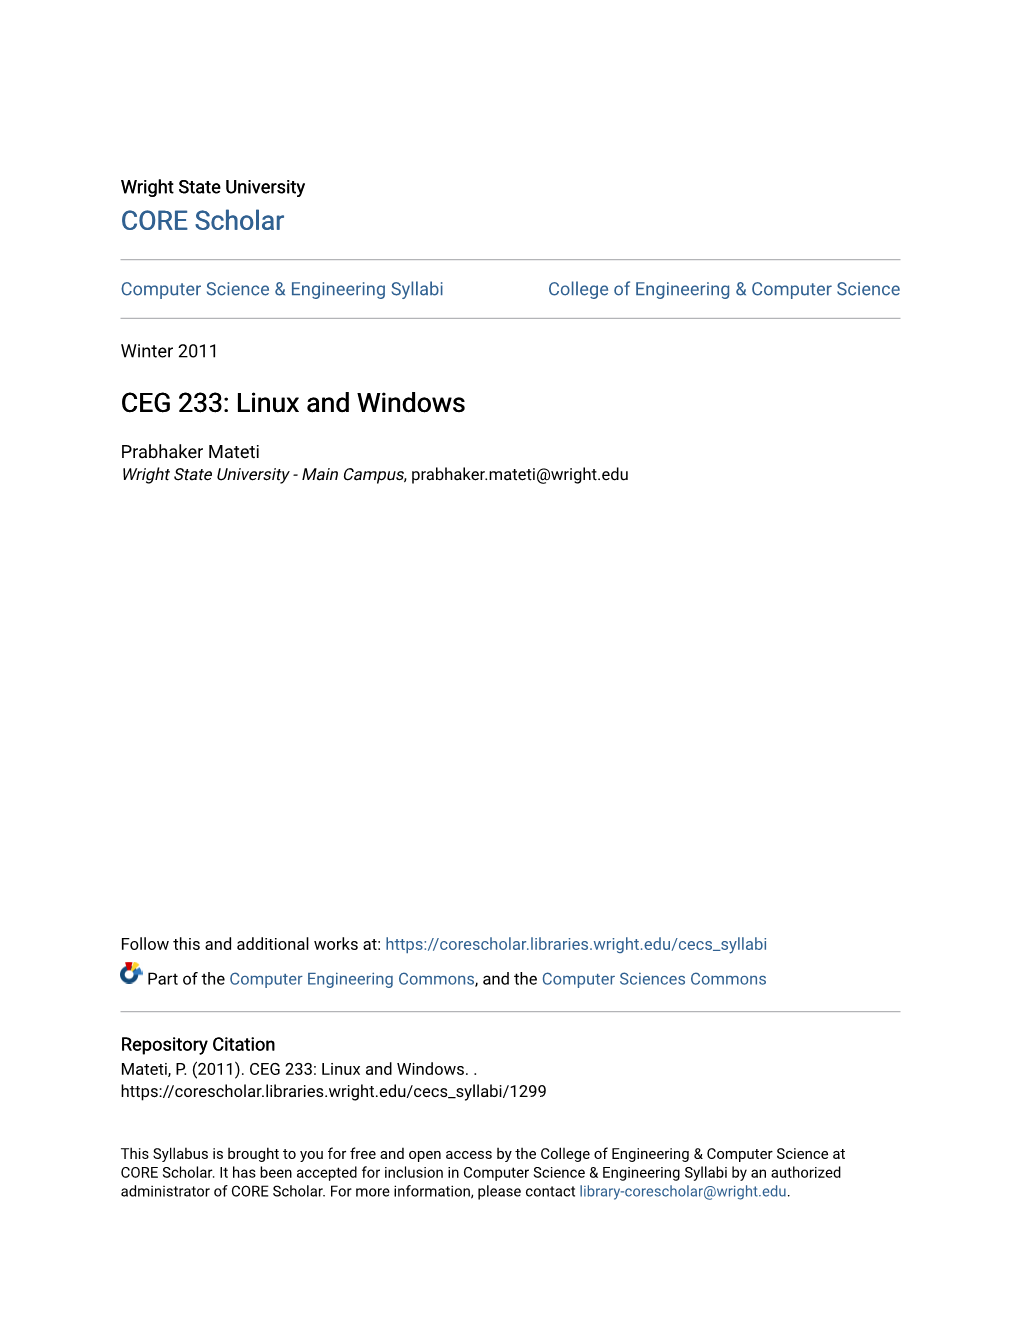 CEG 233: Linux and Windows